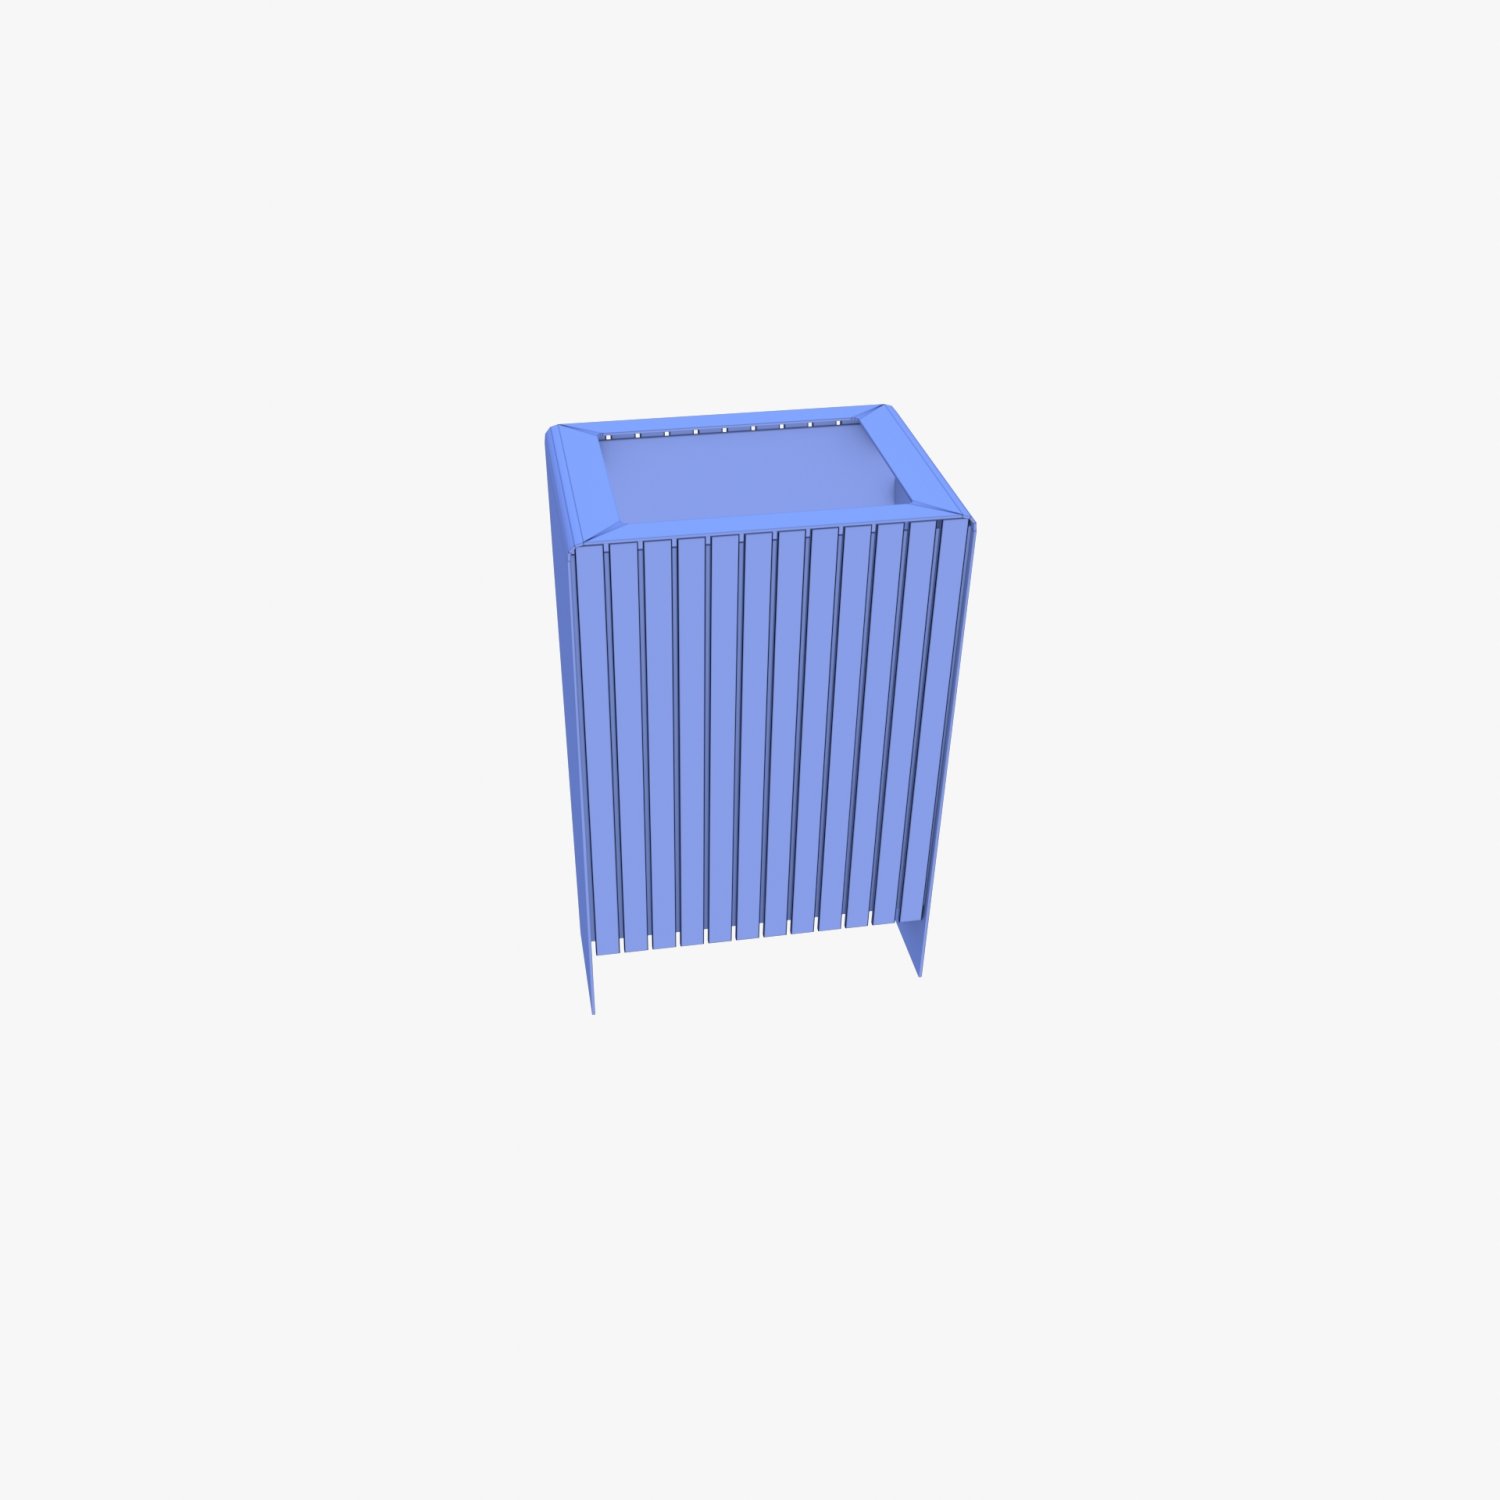 Trash can v1 3D Model in Parts 3DExport